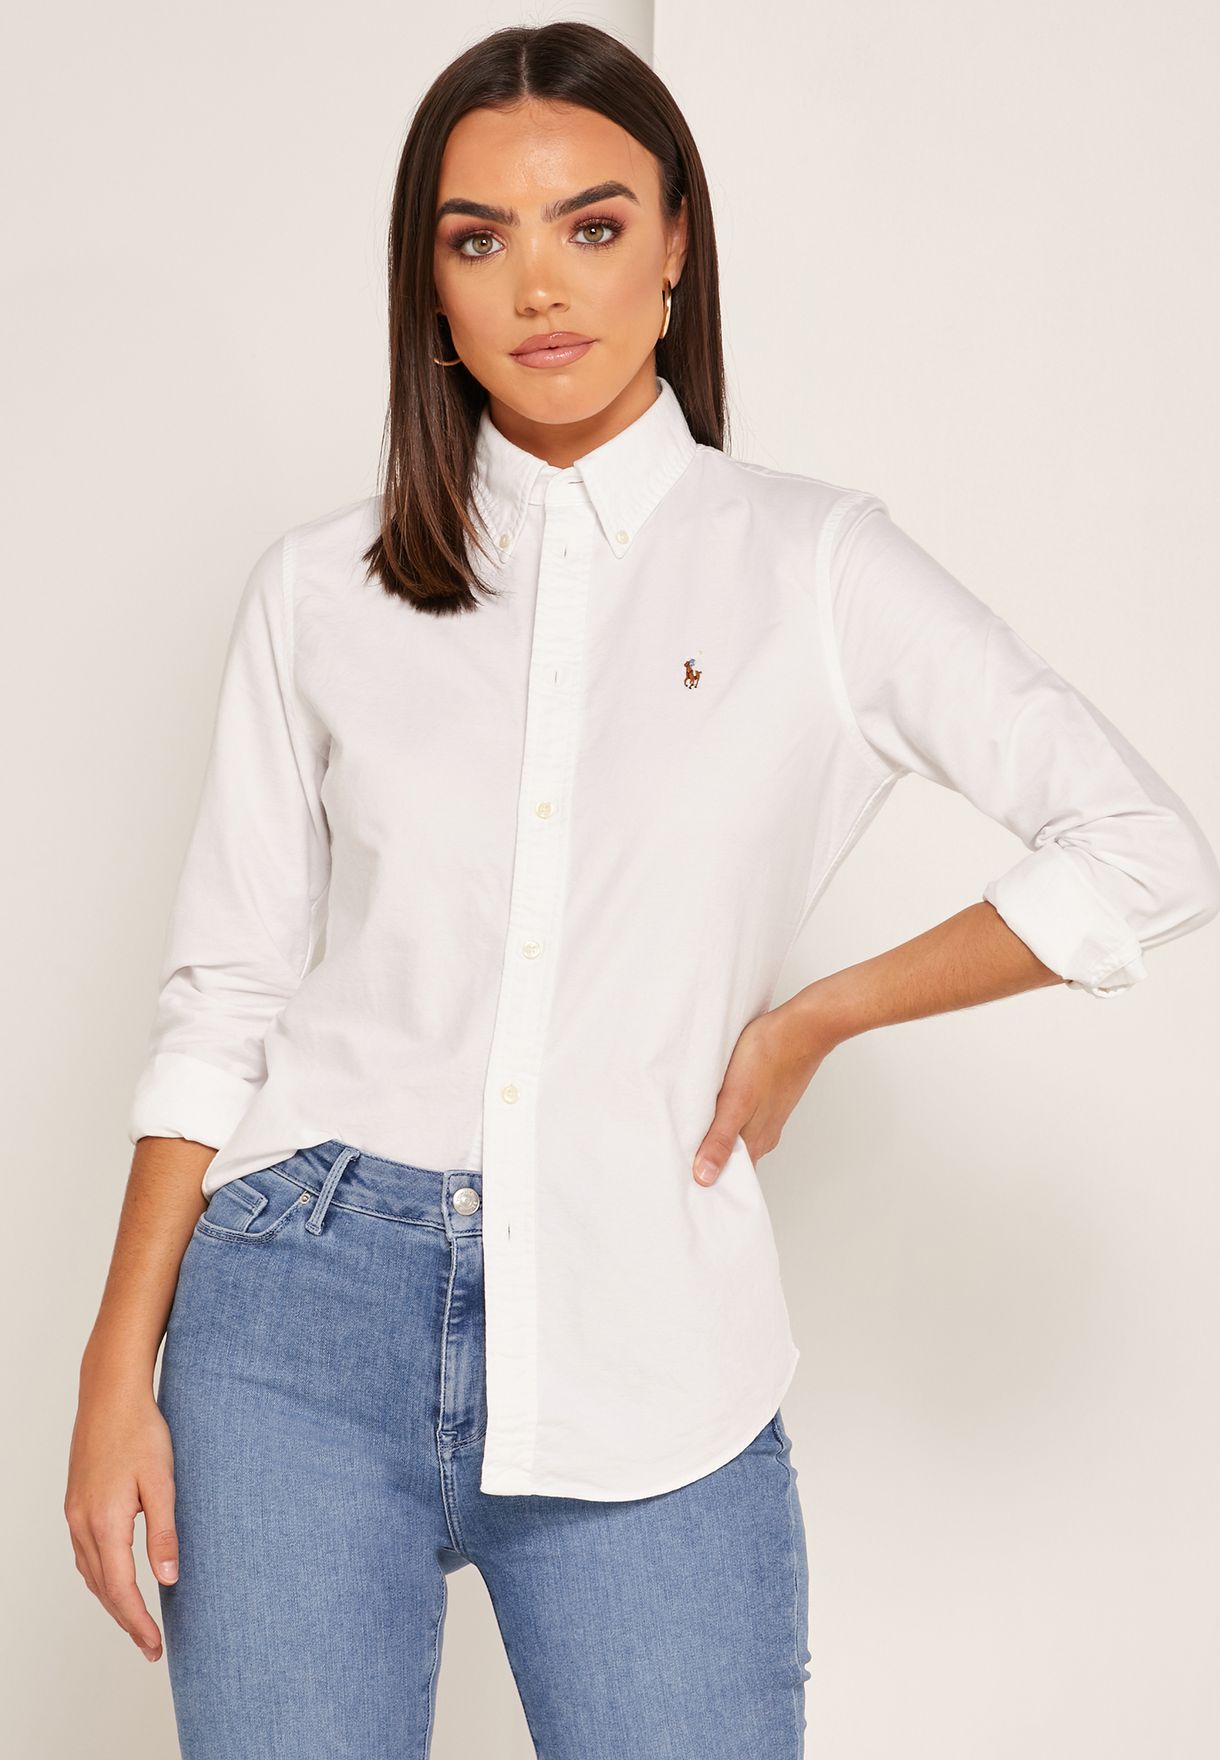 women's button down polo shirts ralph lauren